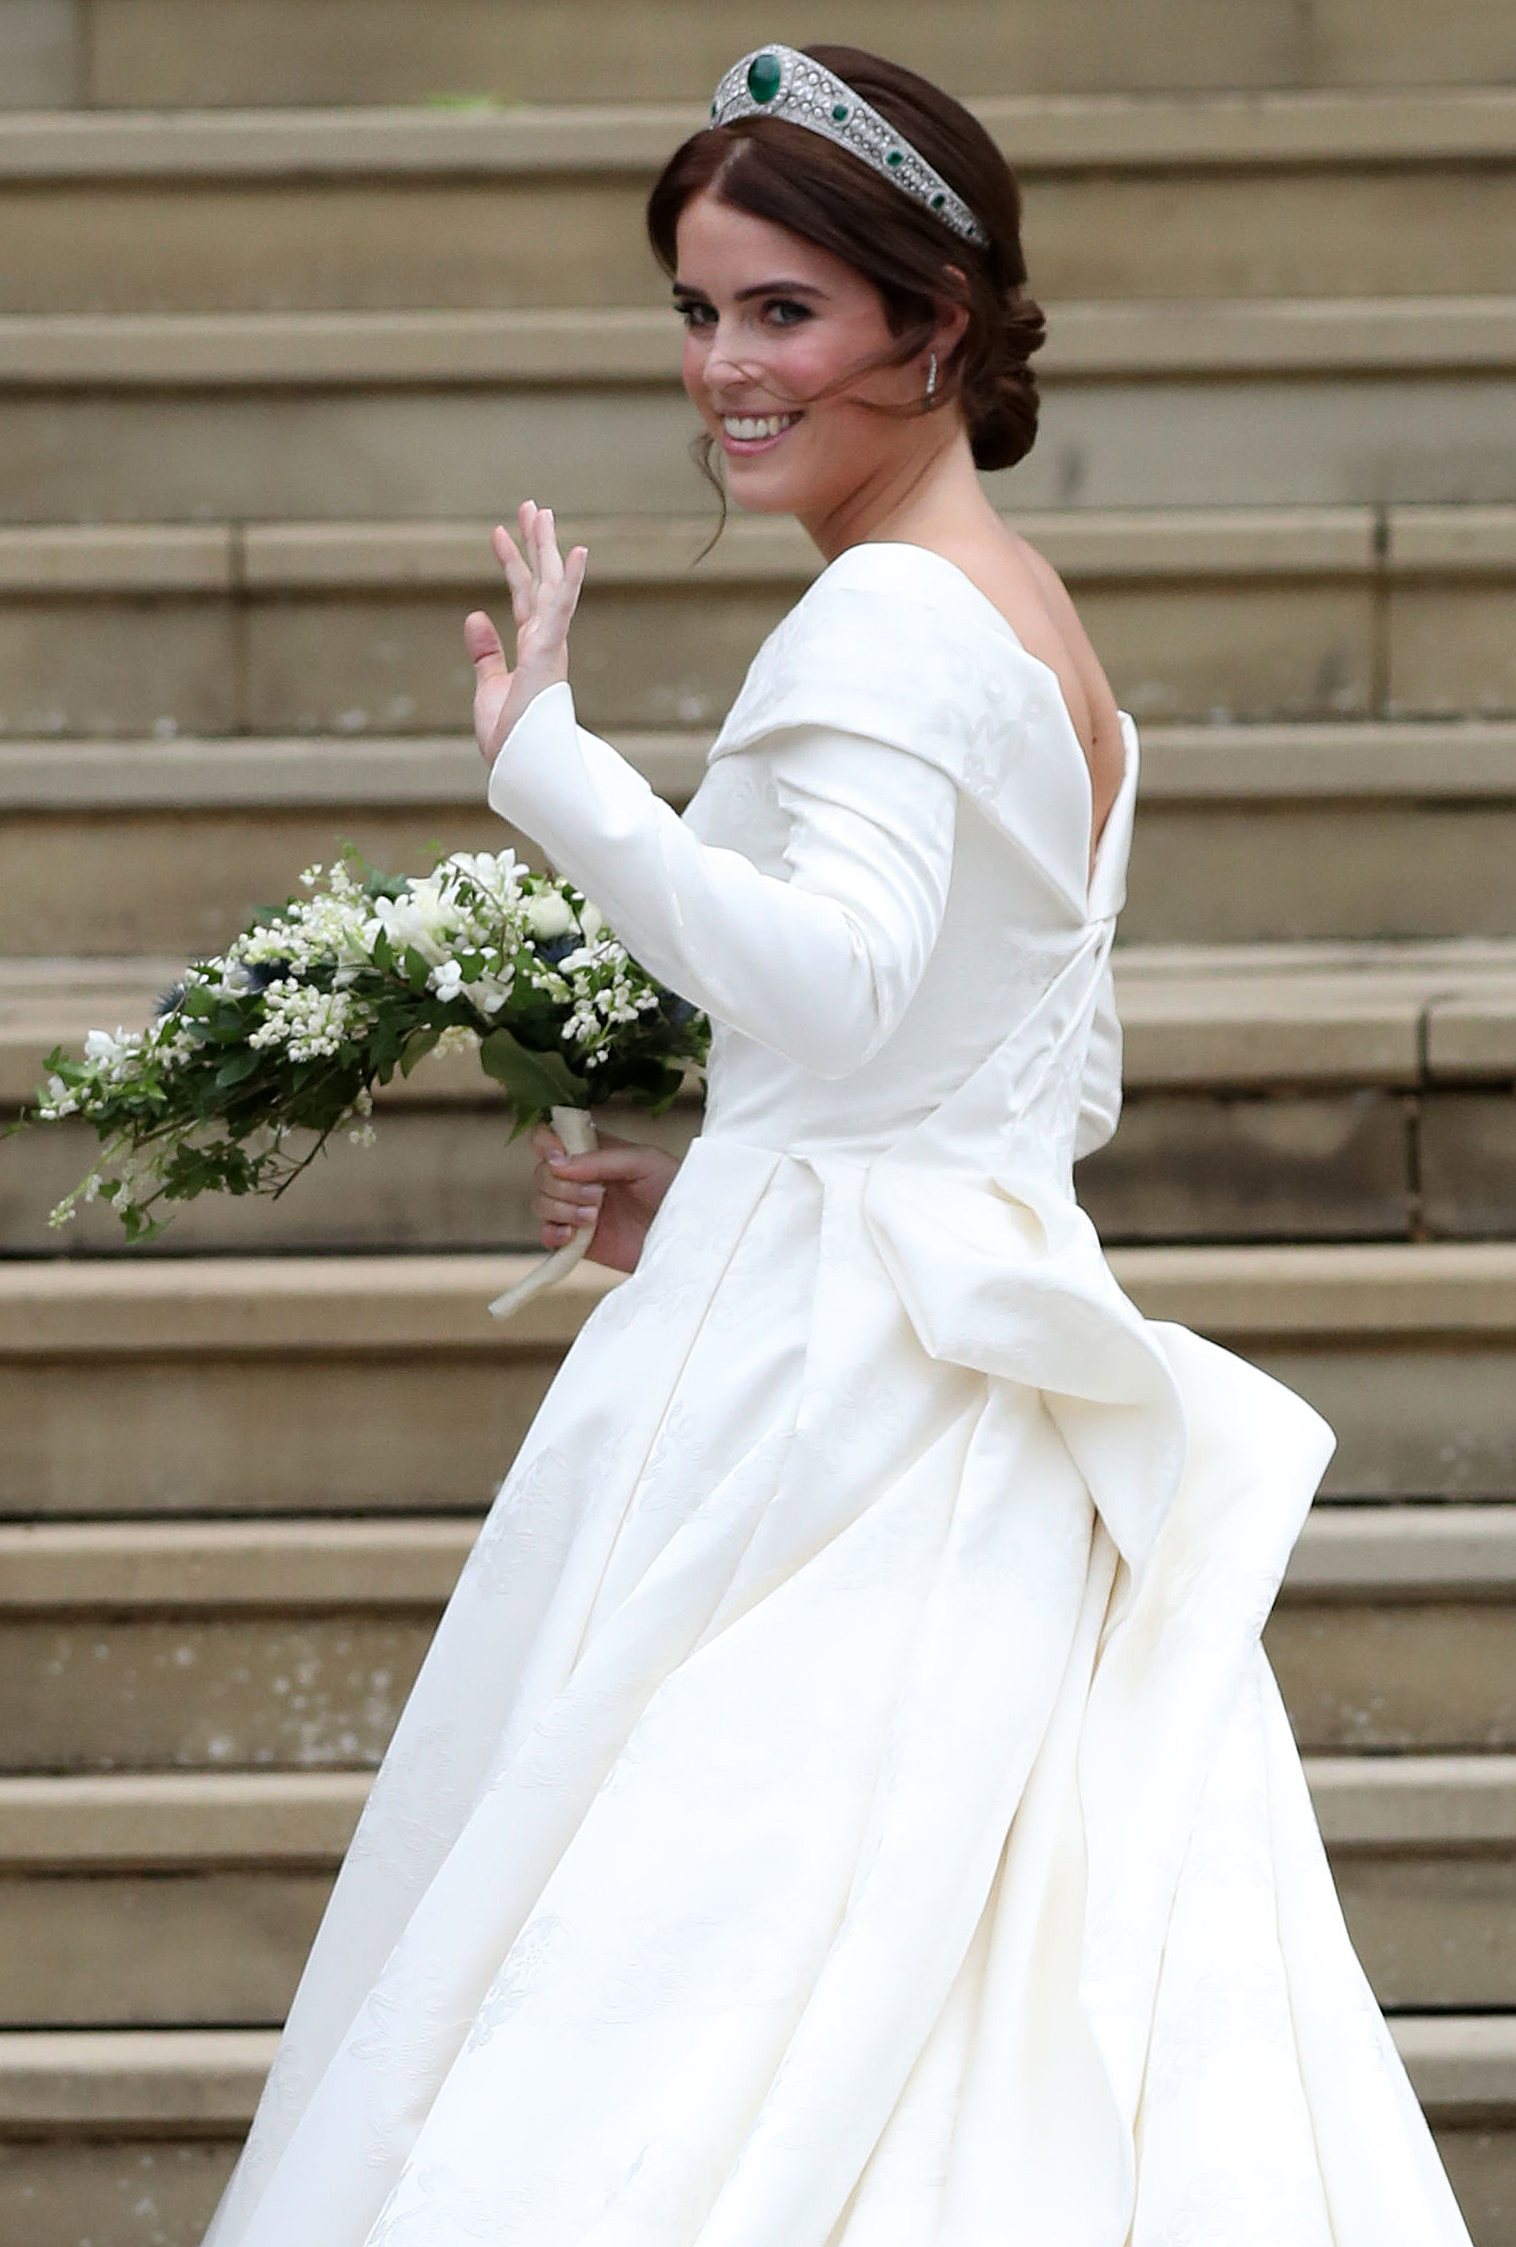 Princess Eugenie waves during her wedding to Jack Brooksbank at St. George's Chapel, Windsor Castle, on October 12, 2018.